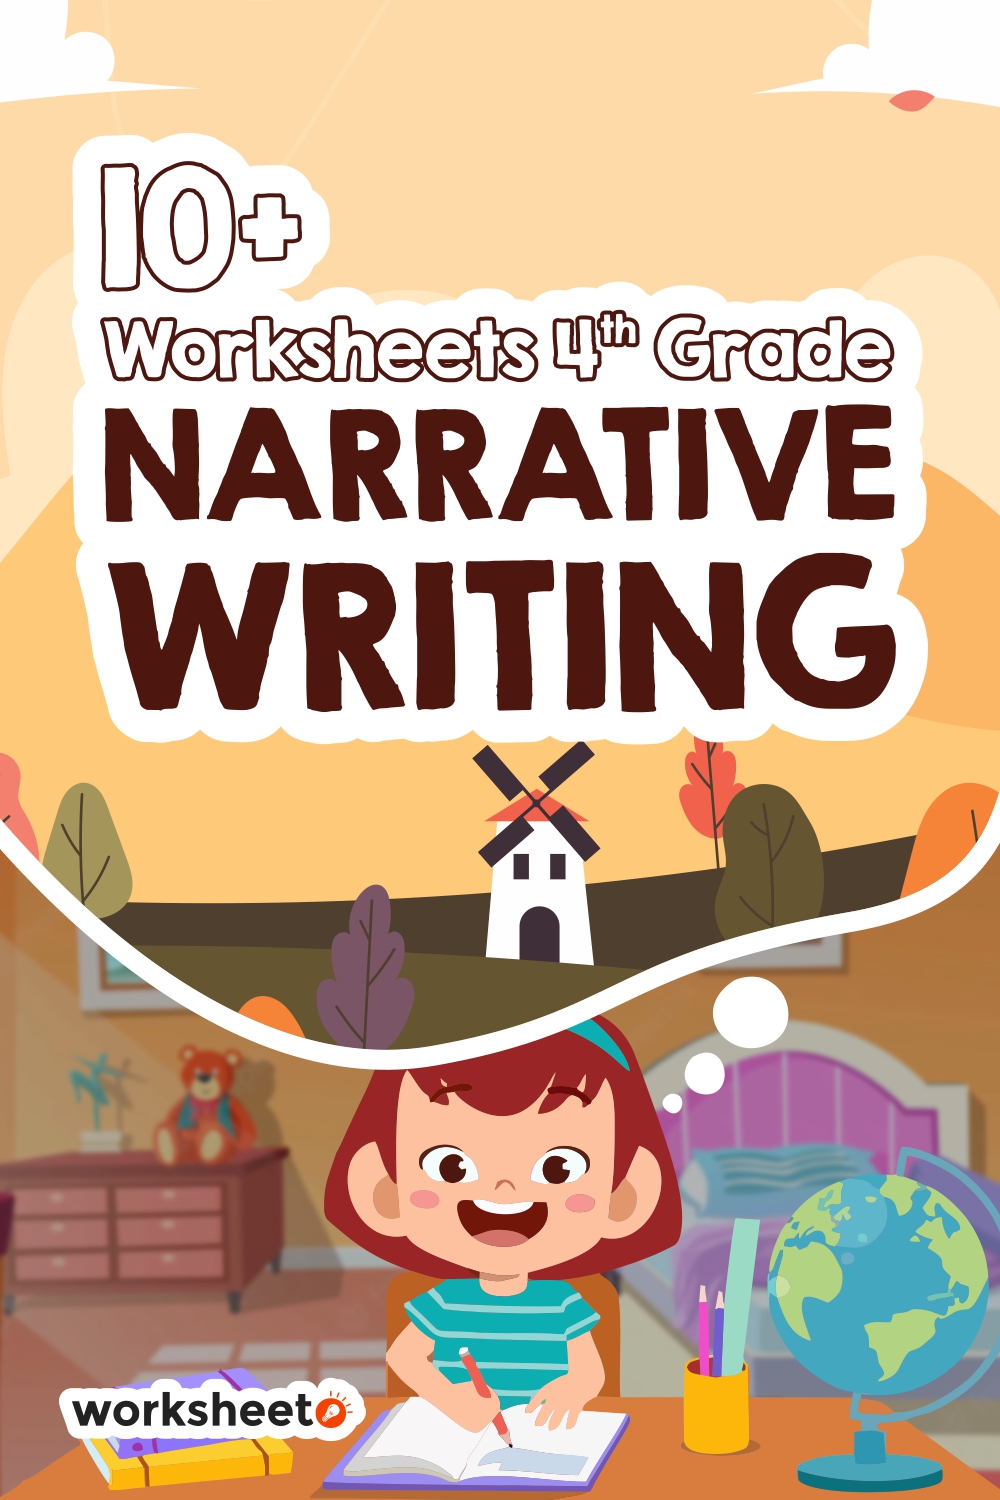 15 Images of Worksheets 4th Grade Narrative Writing